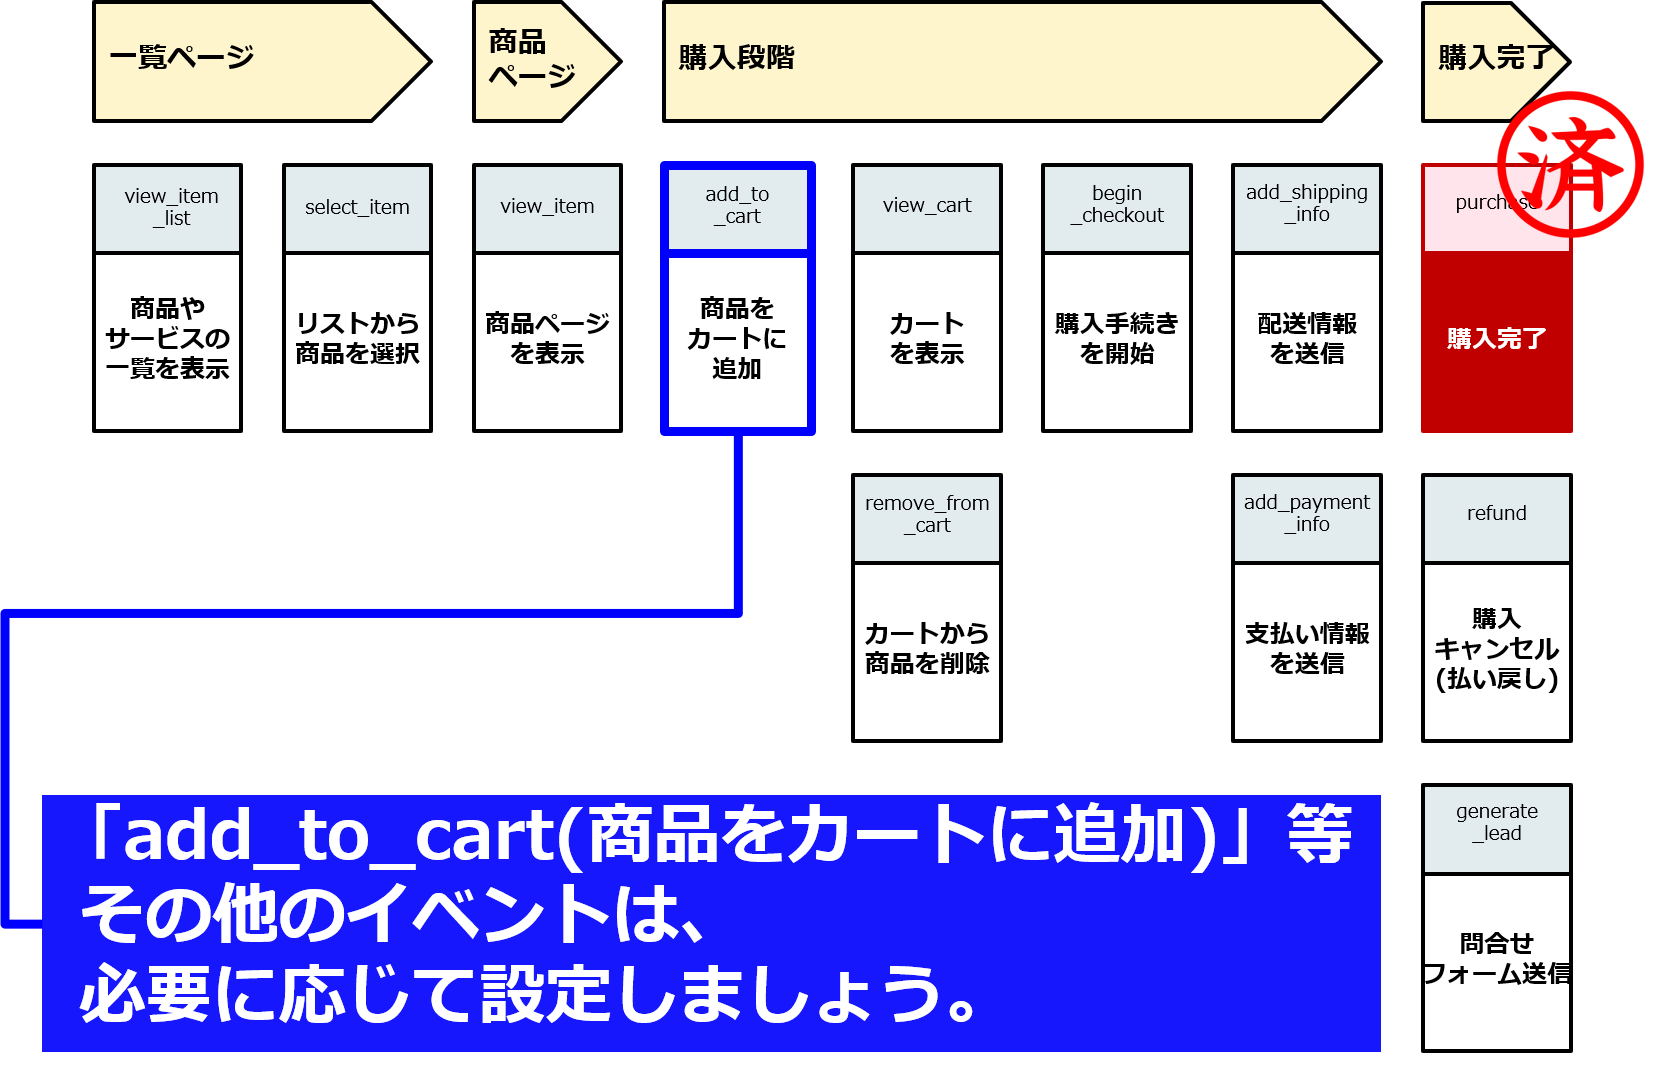 「add_to_cart(商品をカートに追加)」イベント等、その他のイベントは同じ要領で必要に応じて設定